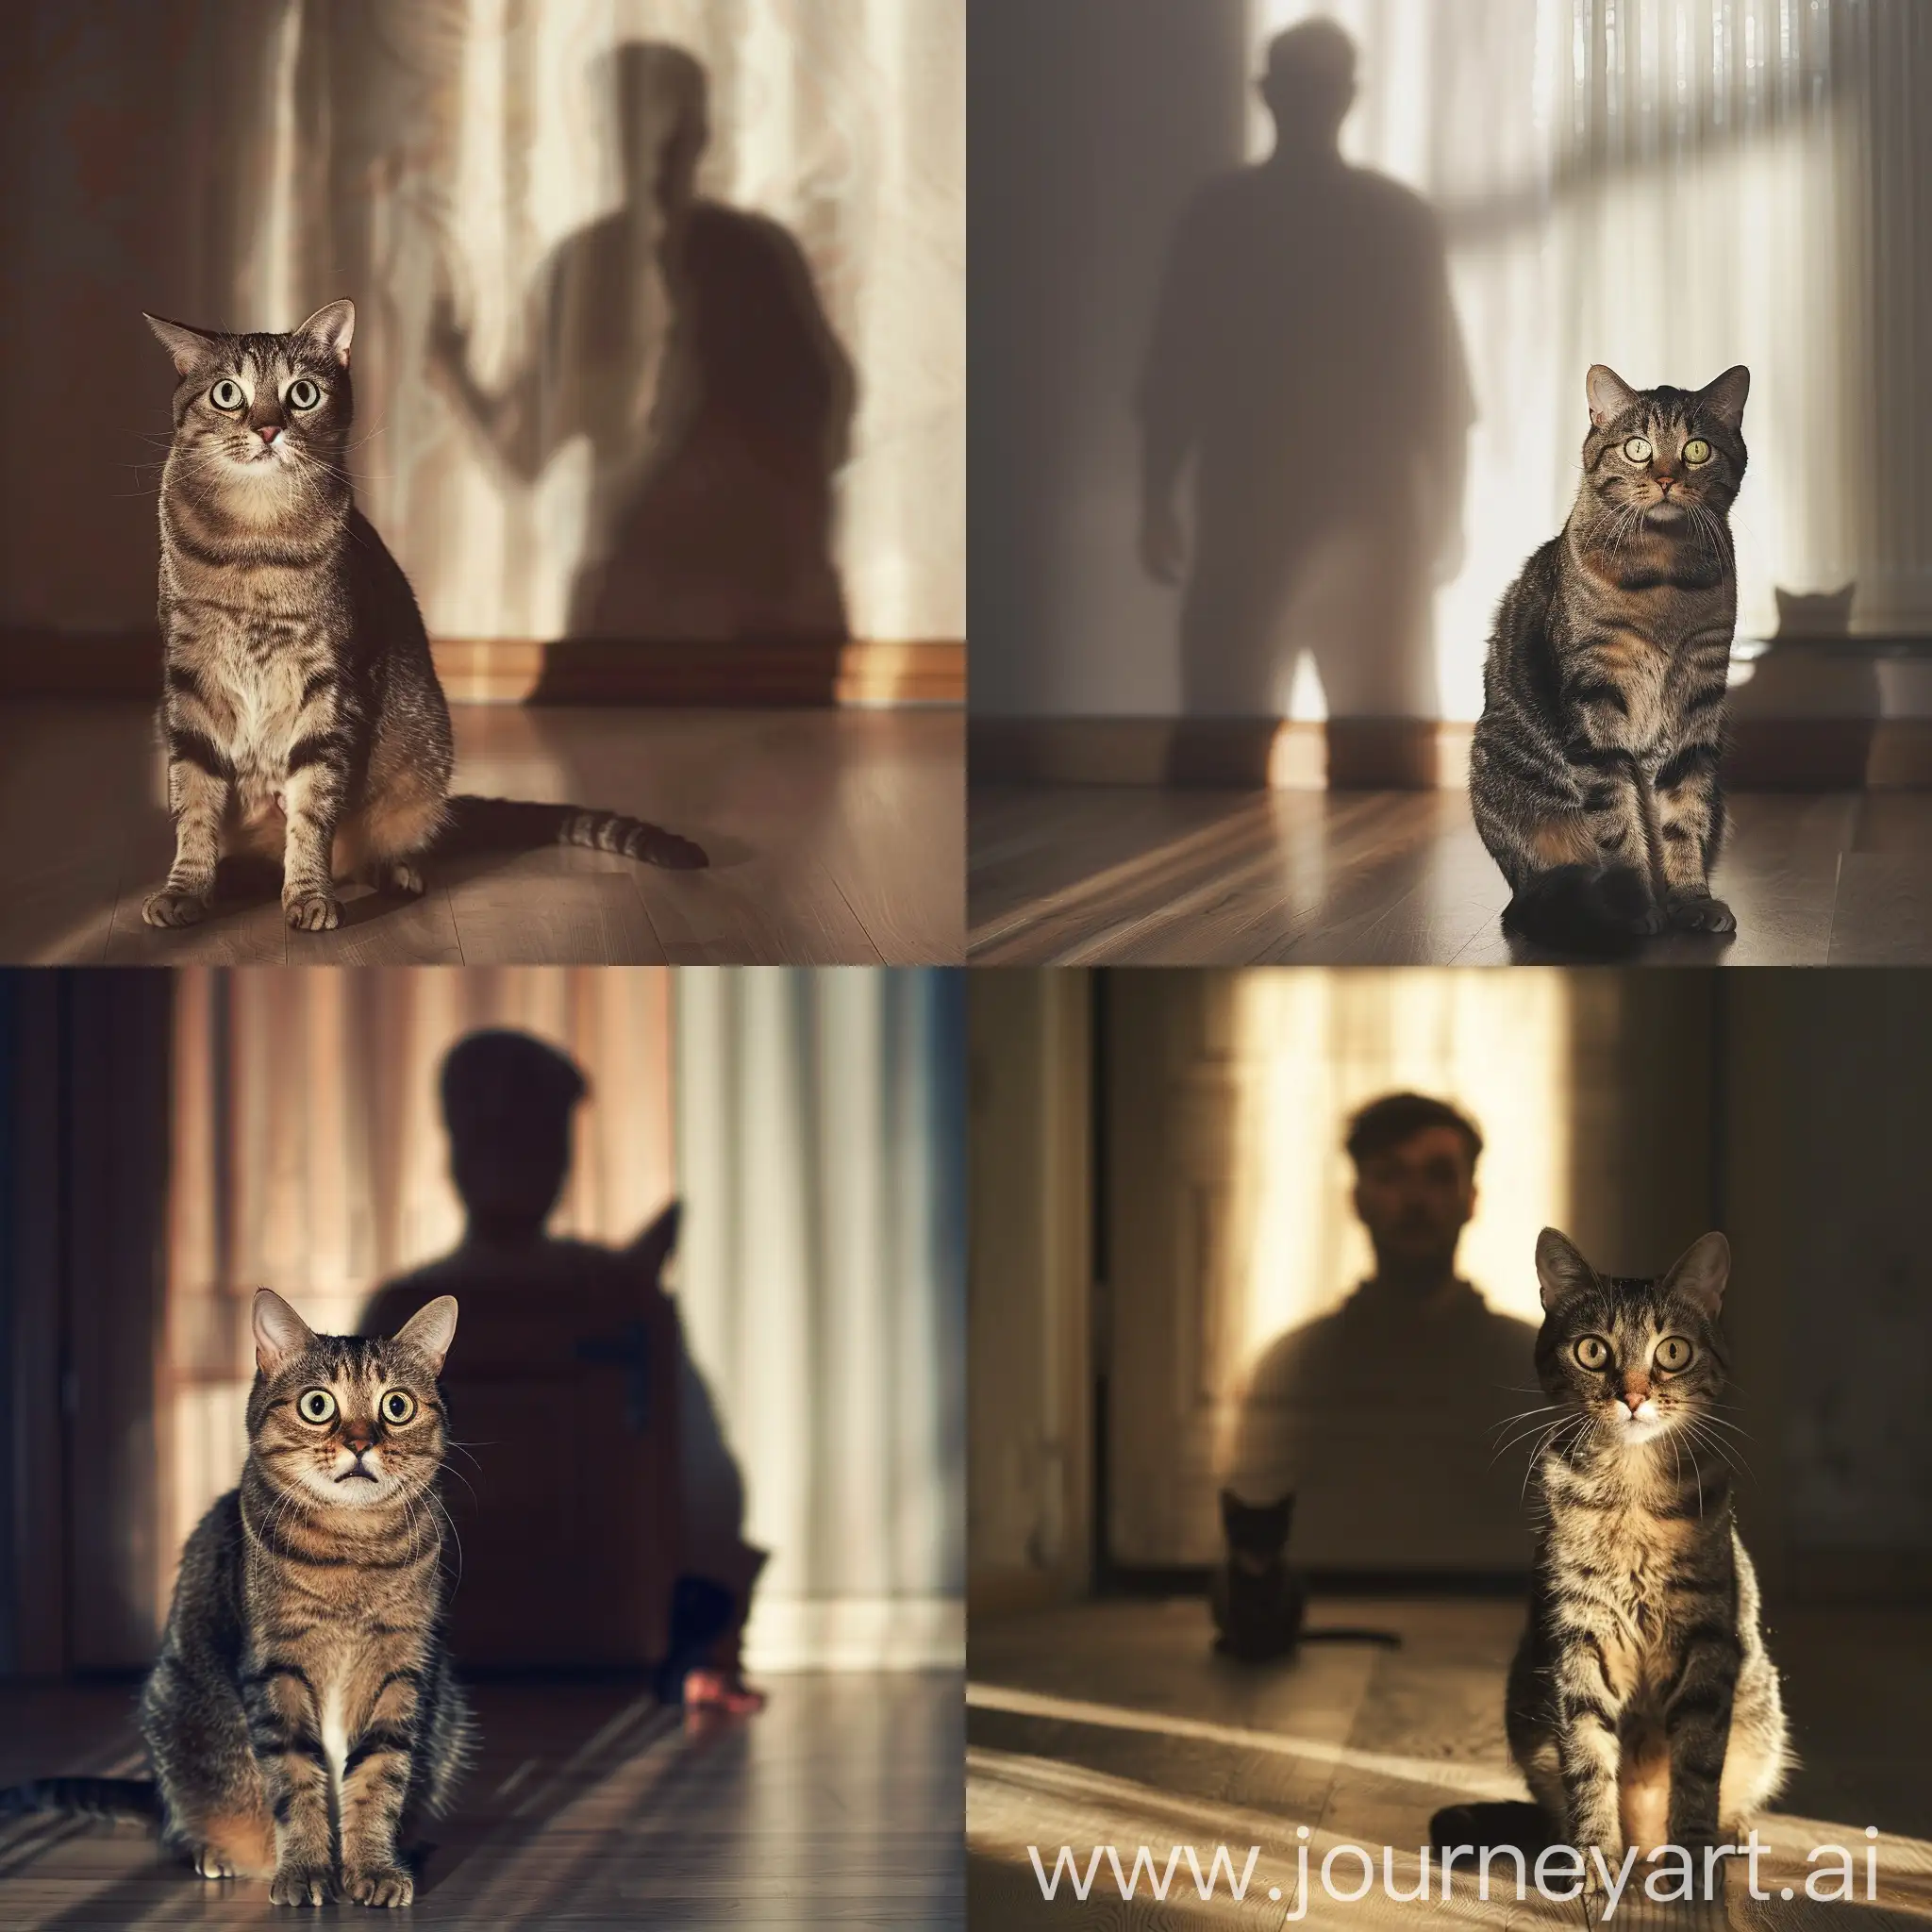 Frightened-Cat-with-Shadowy-Presence-Tense-Feline-Encounter